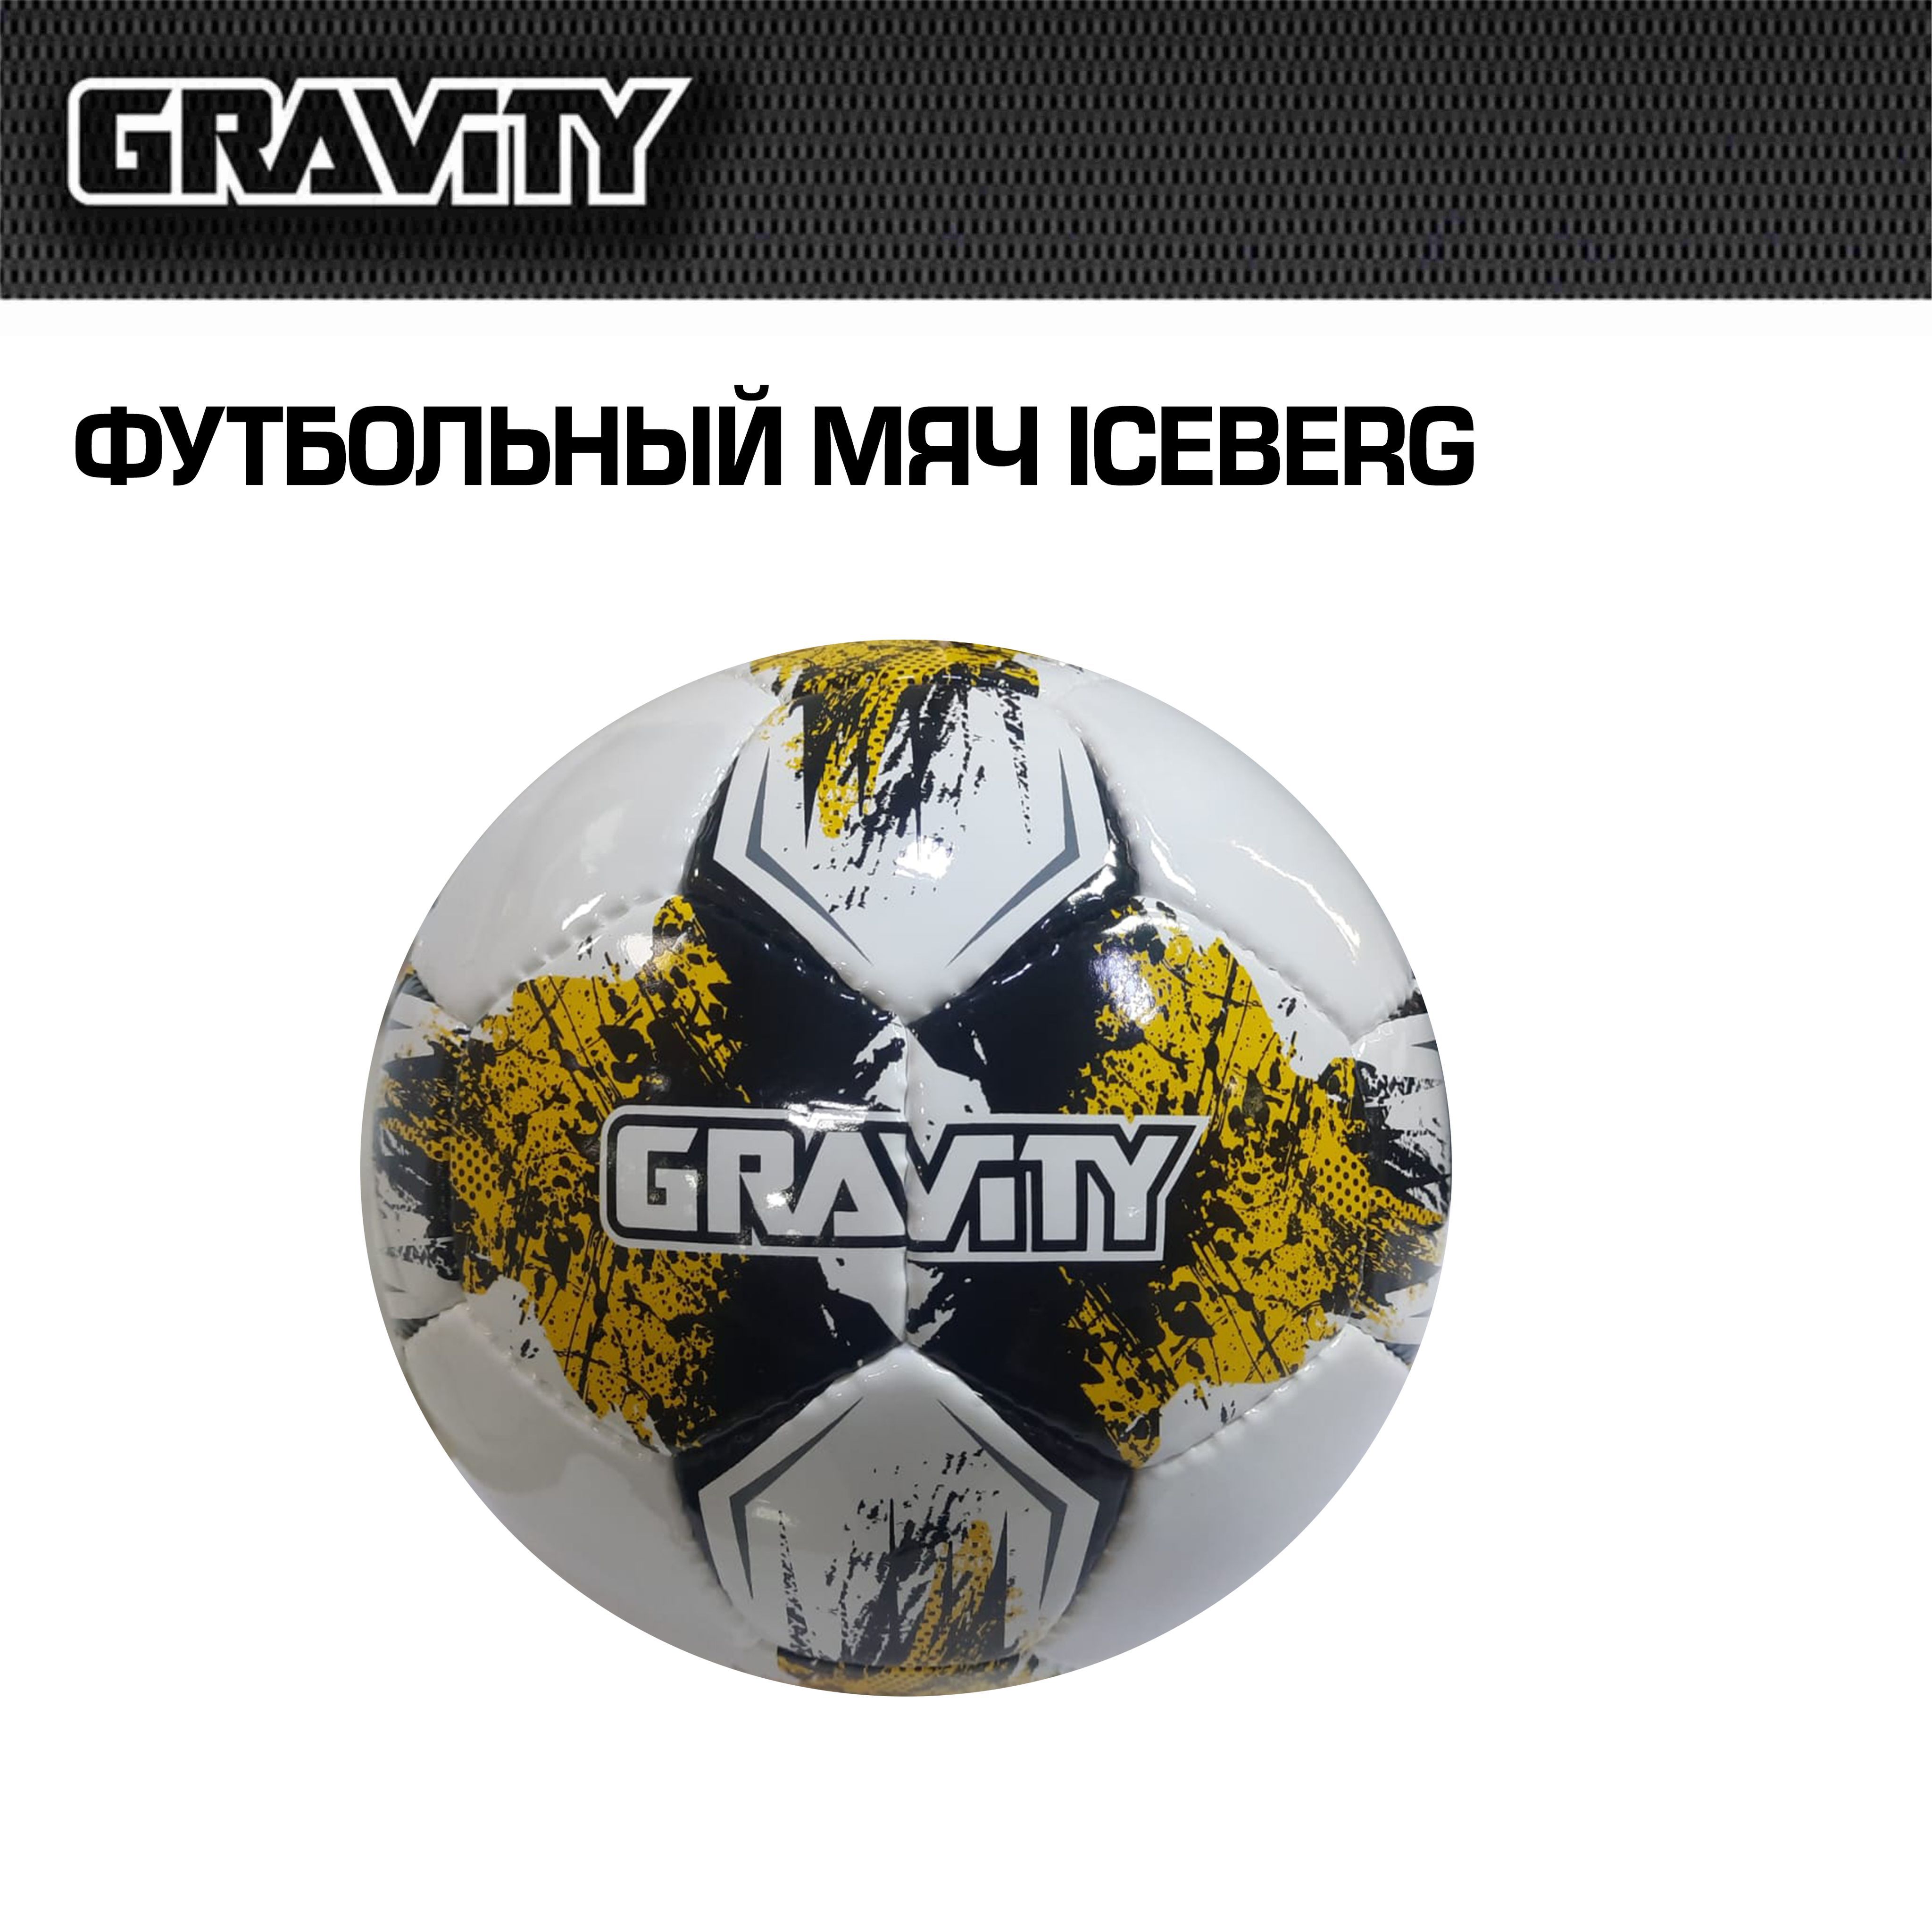 Футбольный мяч Gravity, ручная сшивка, ICEBERG